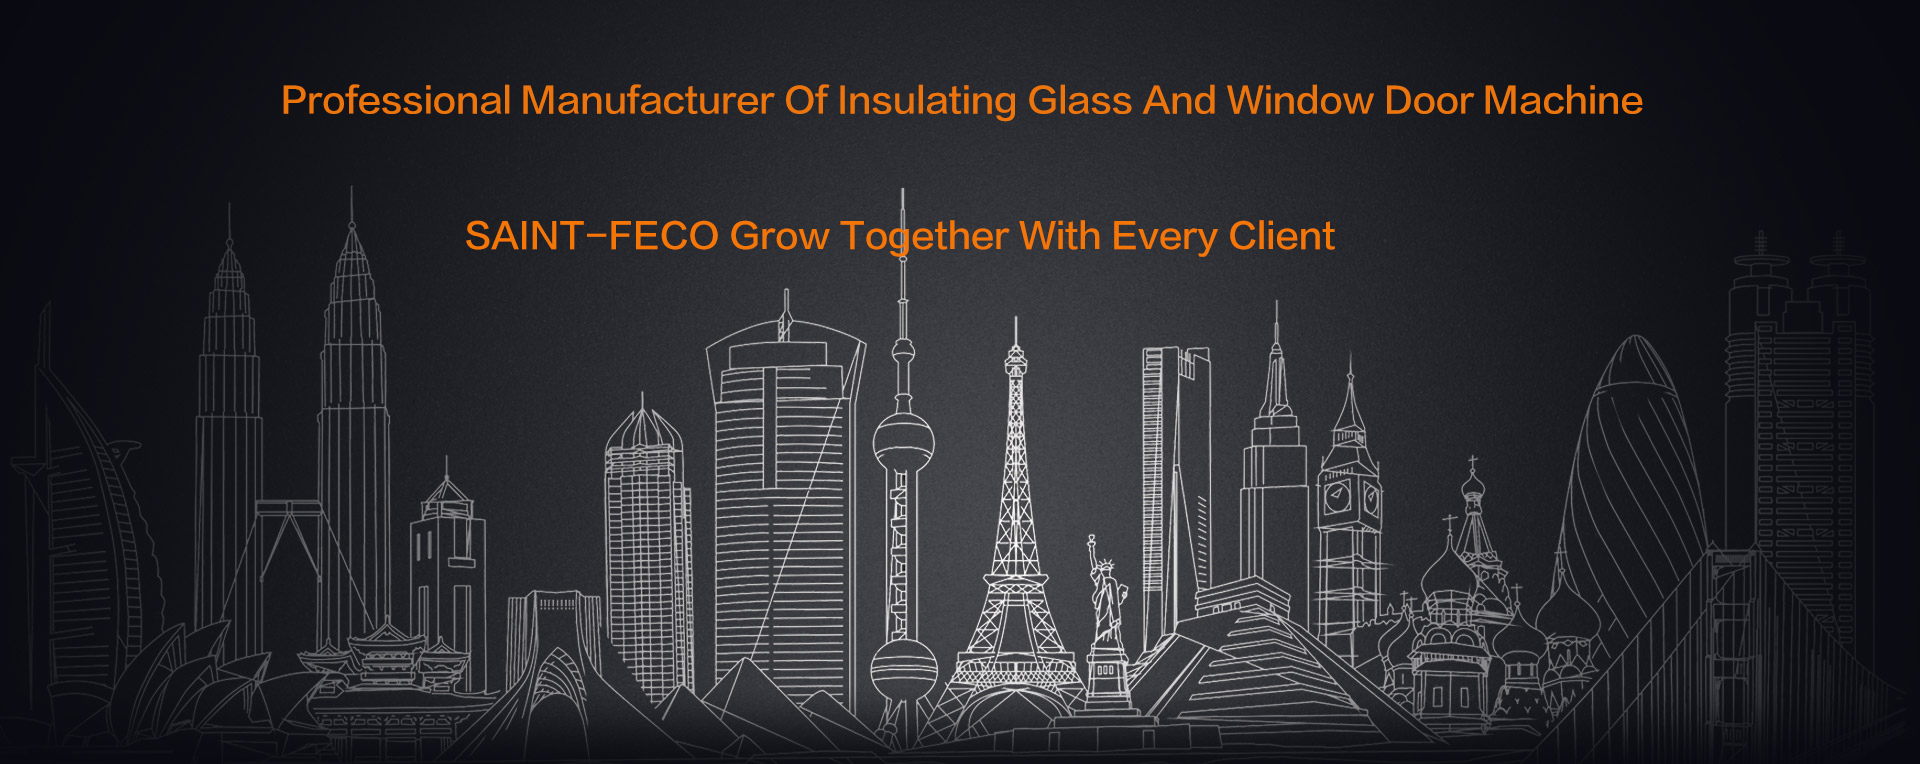 Professional Manufacturer Of Insulating Glass And Window Door Machine